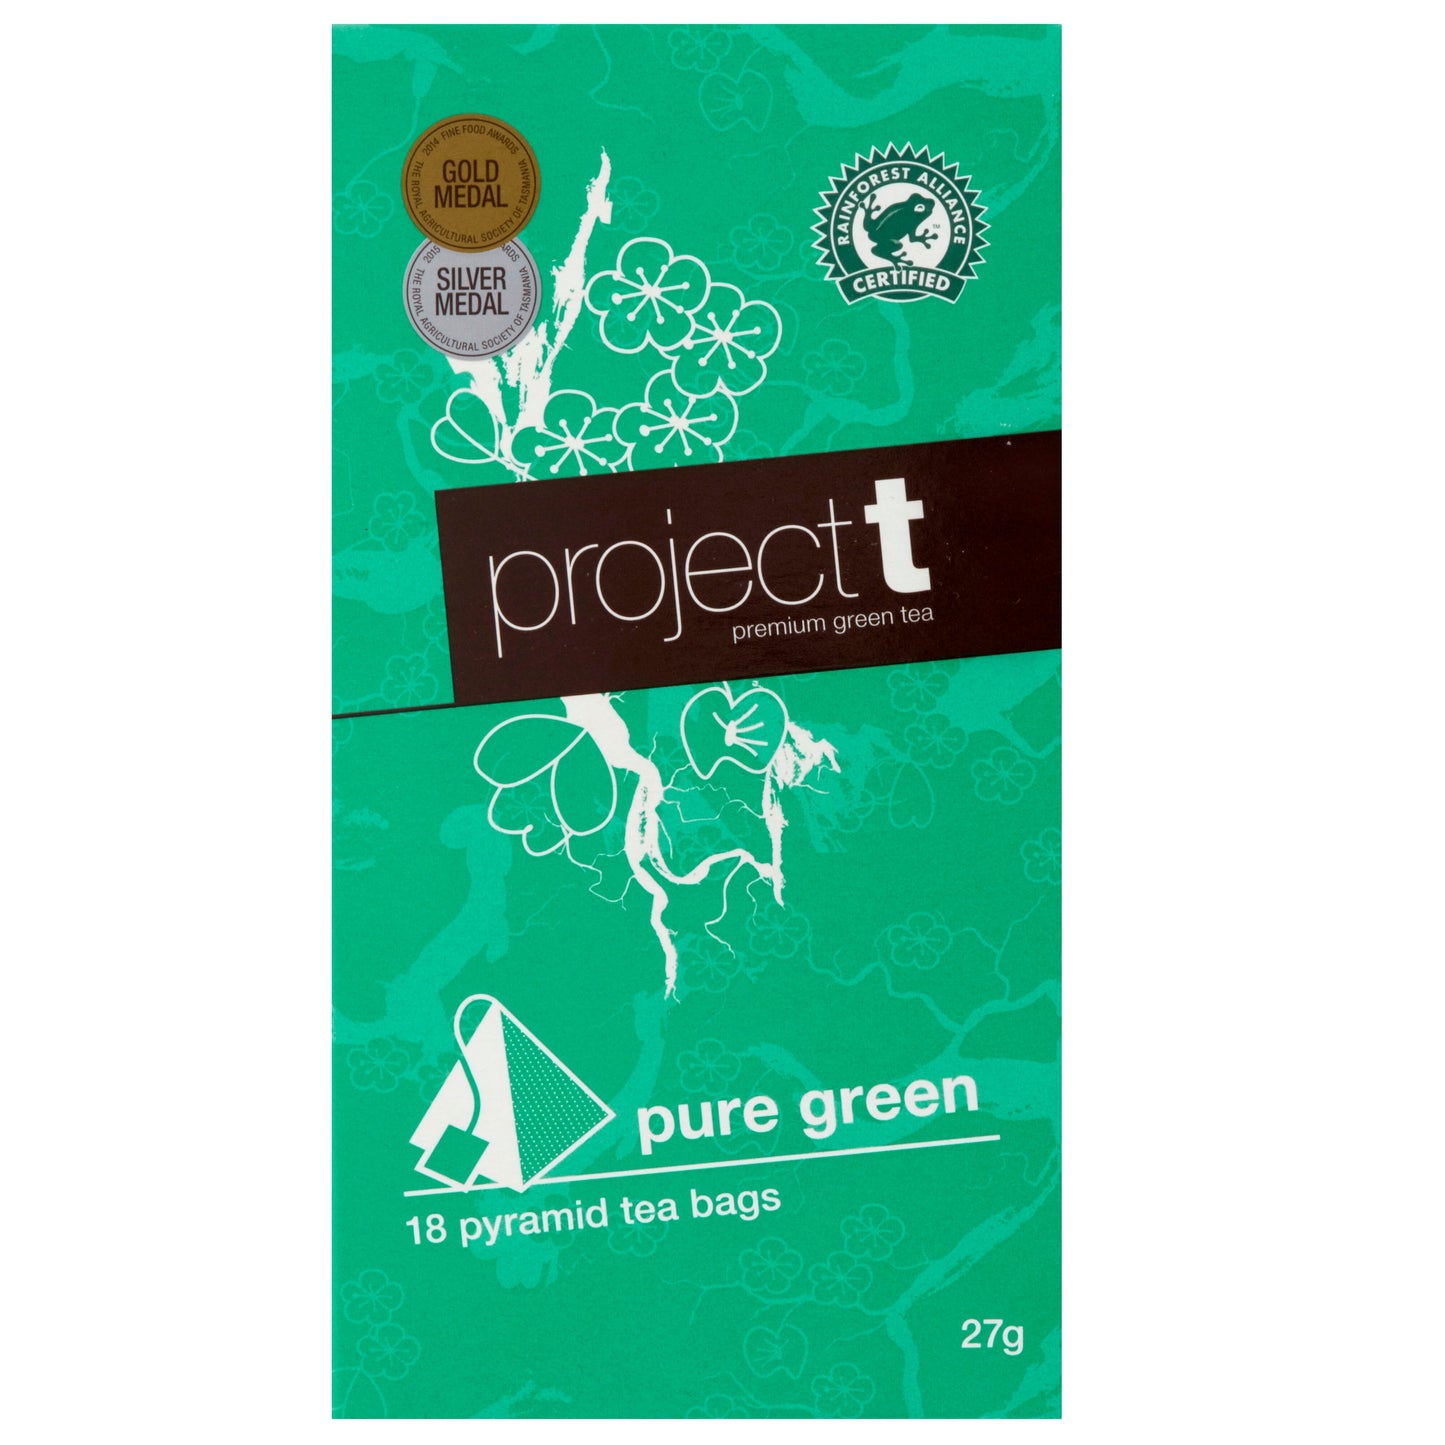 Project T Pure Green Pyramid Tea Bags 18pk Fair Coffee 